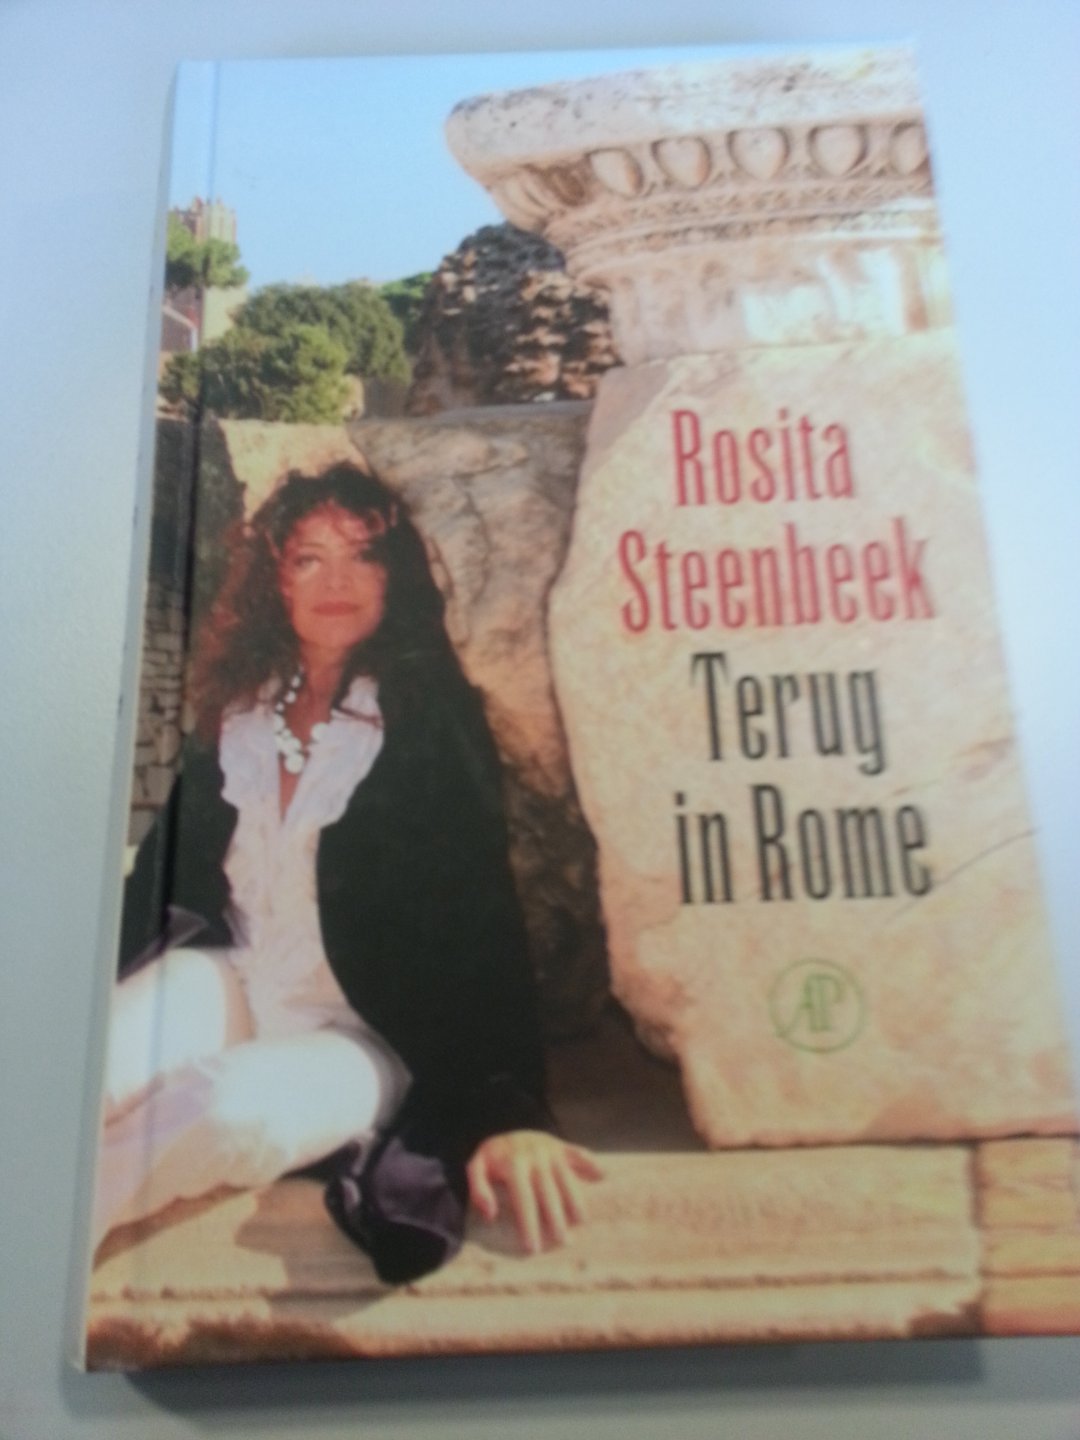 Steenbeek, Rosita - Terug in Rome